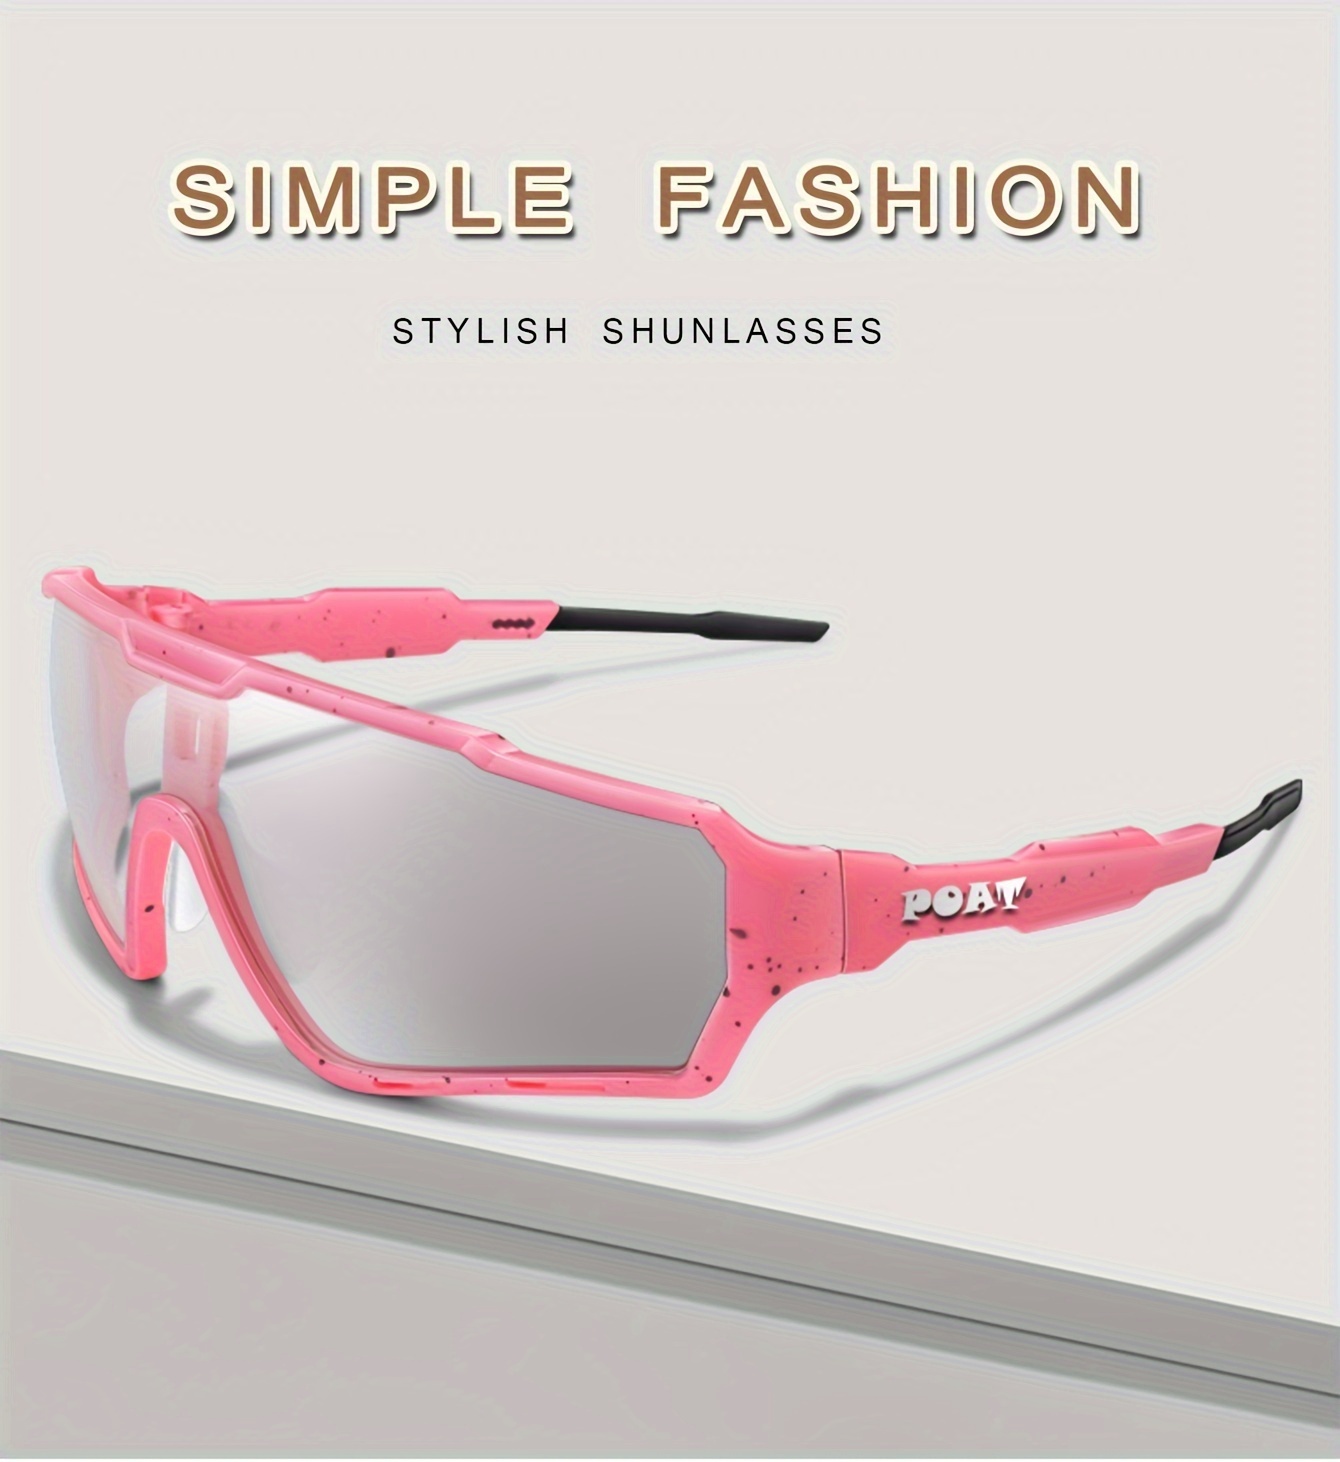 Premium New Cool Photochromic Sunglasses Outdoor Sports Goggles